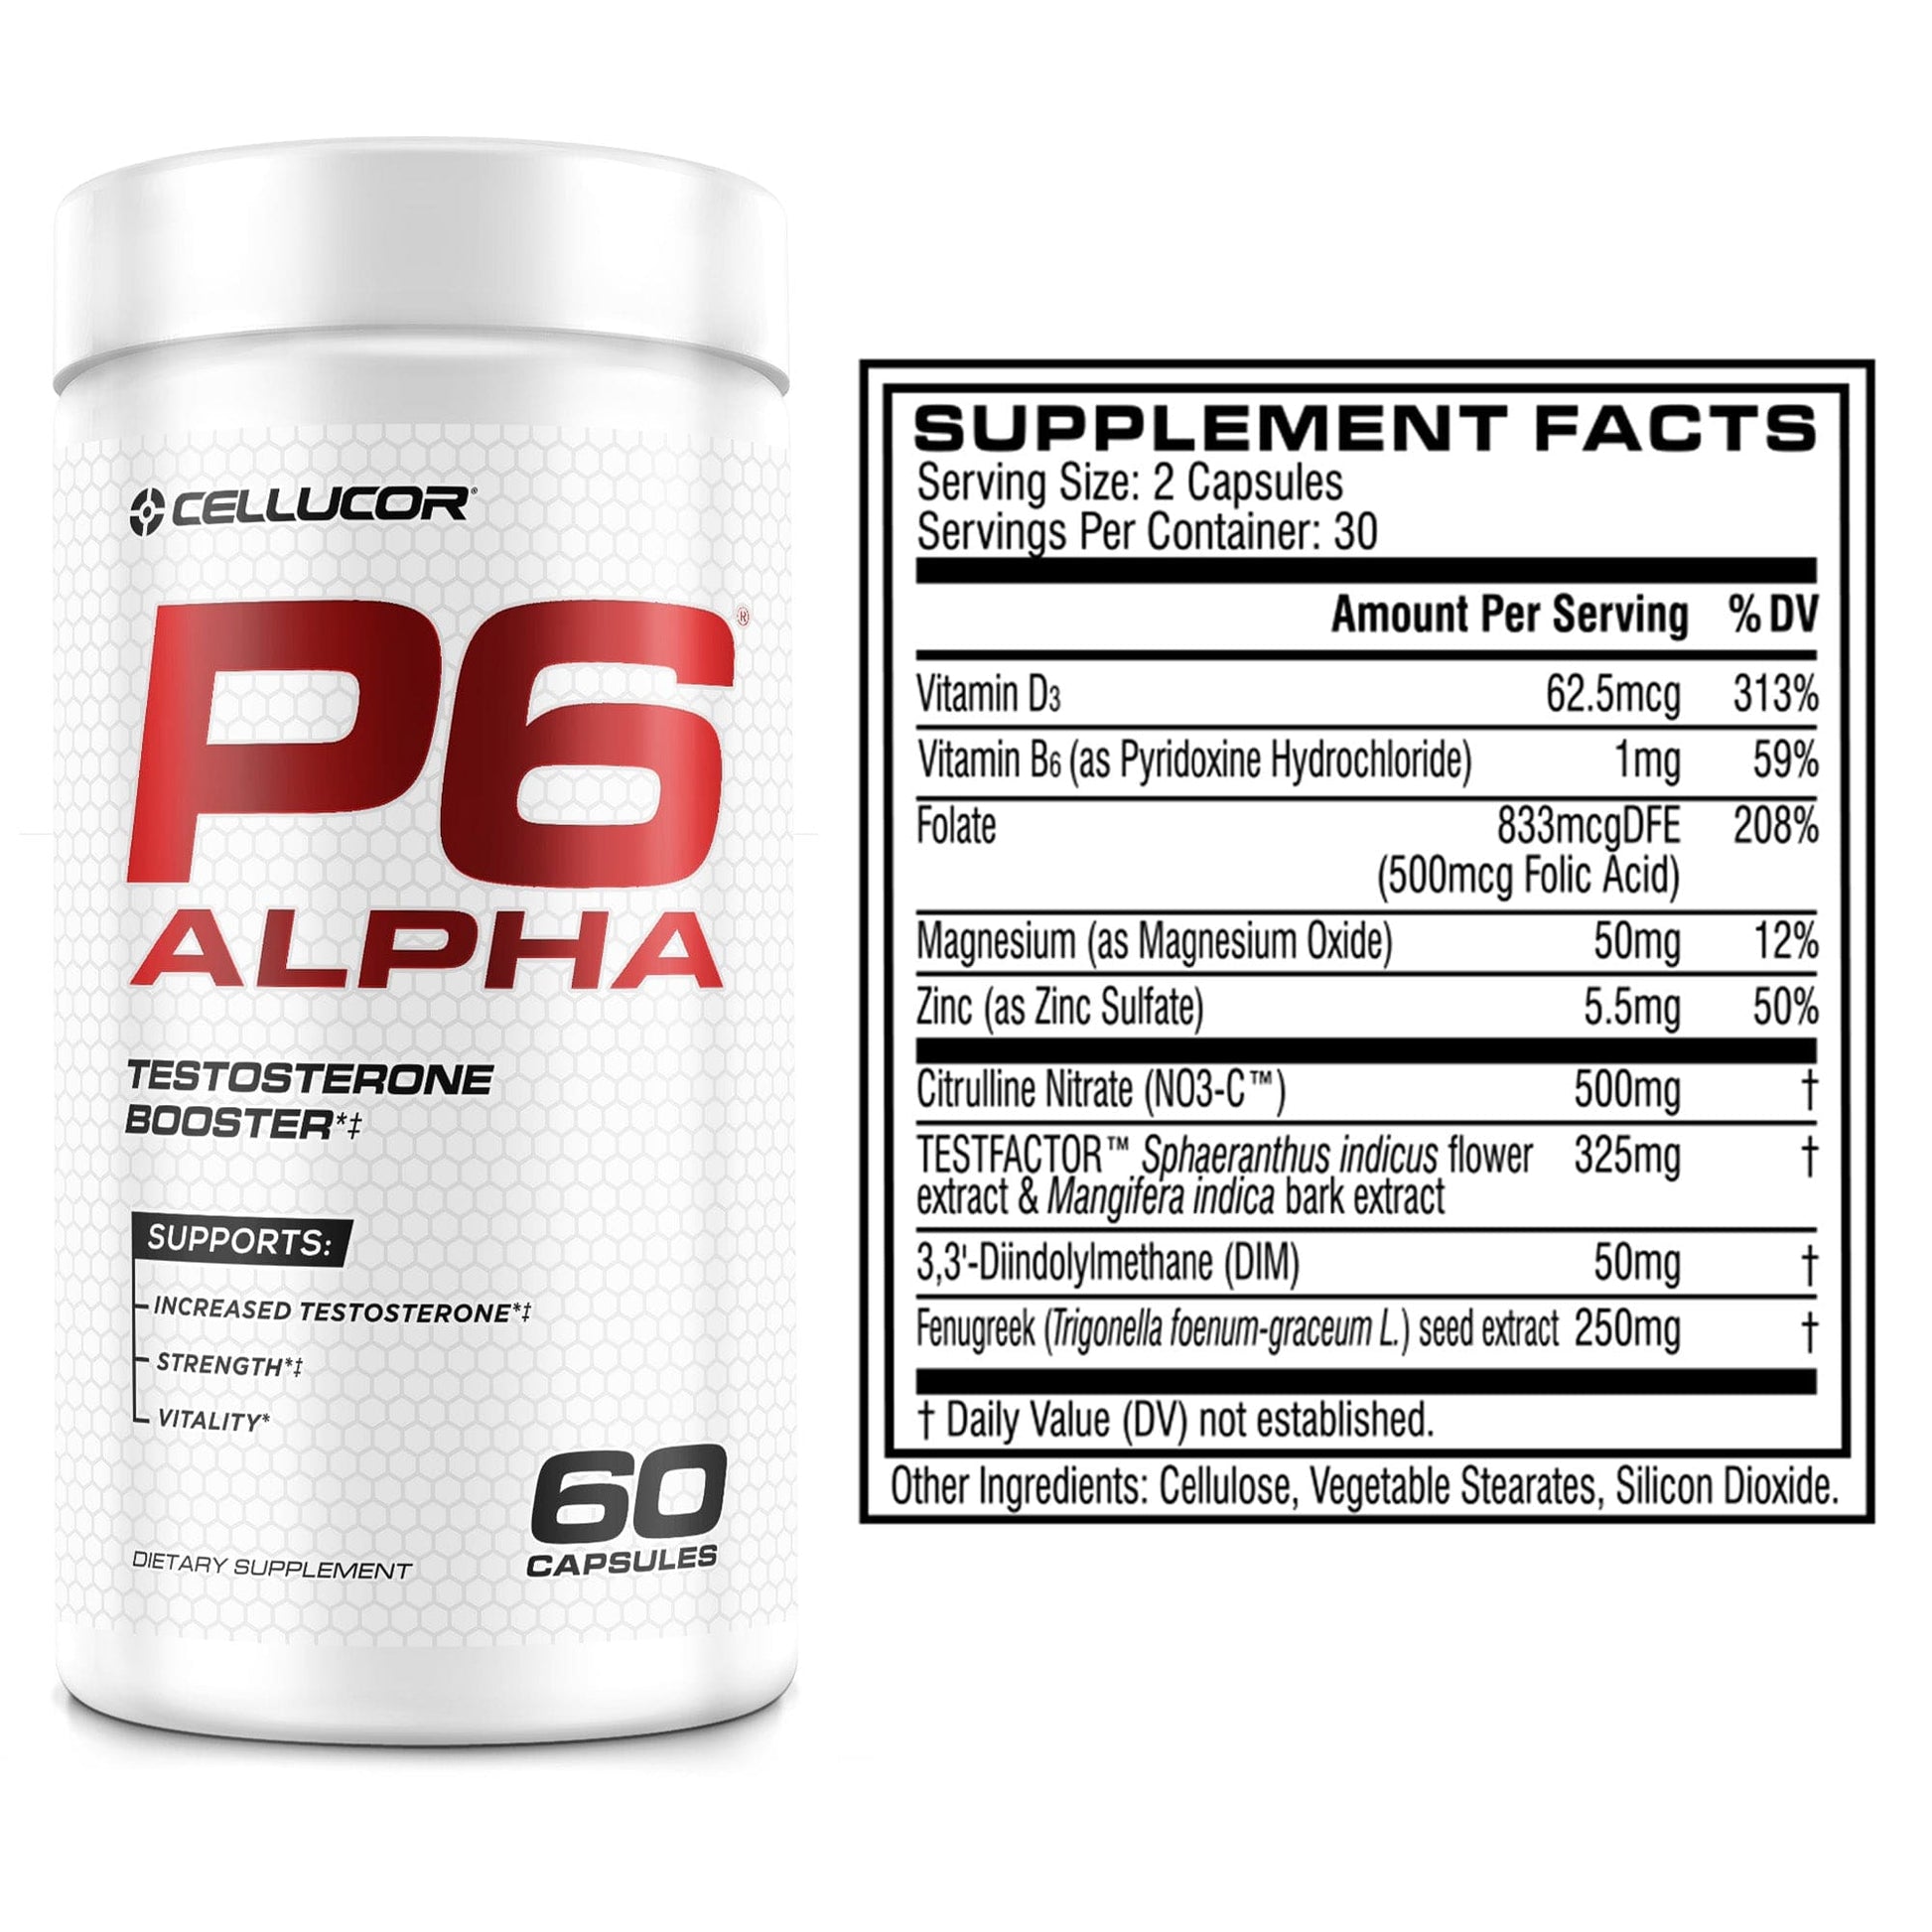 P6 Alpha - supplement facts label View 3